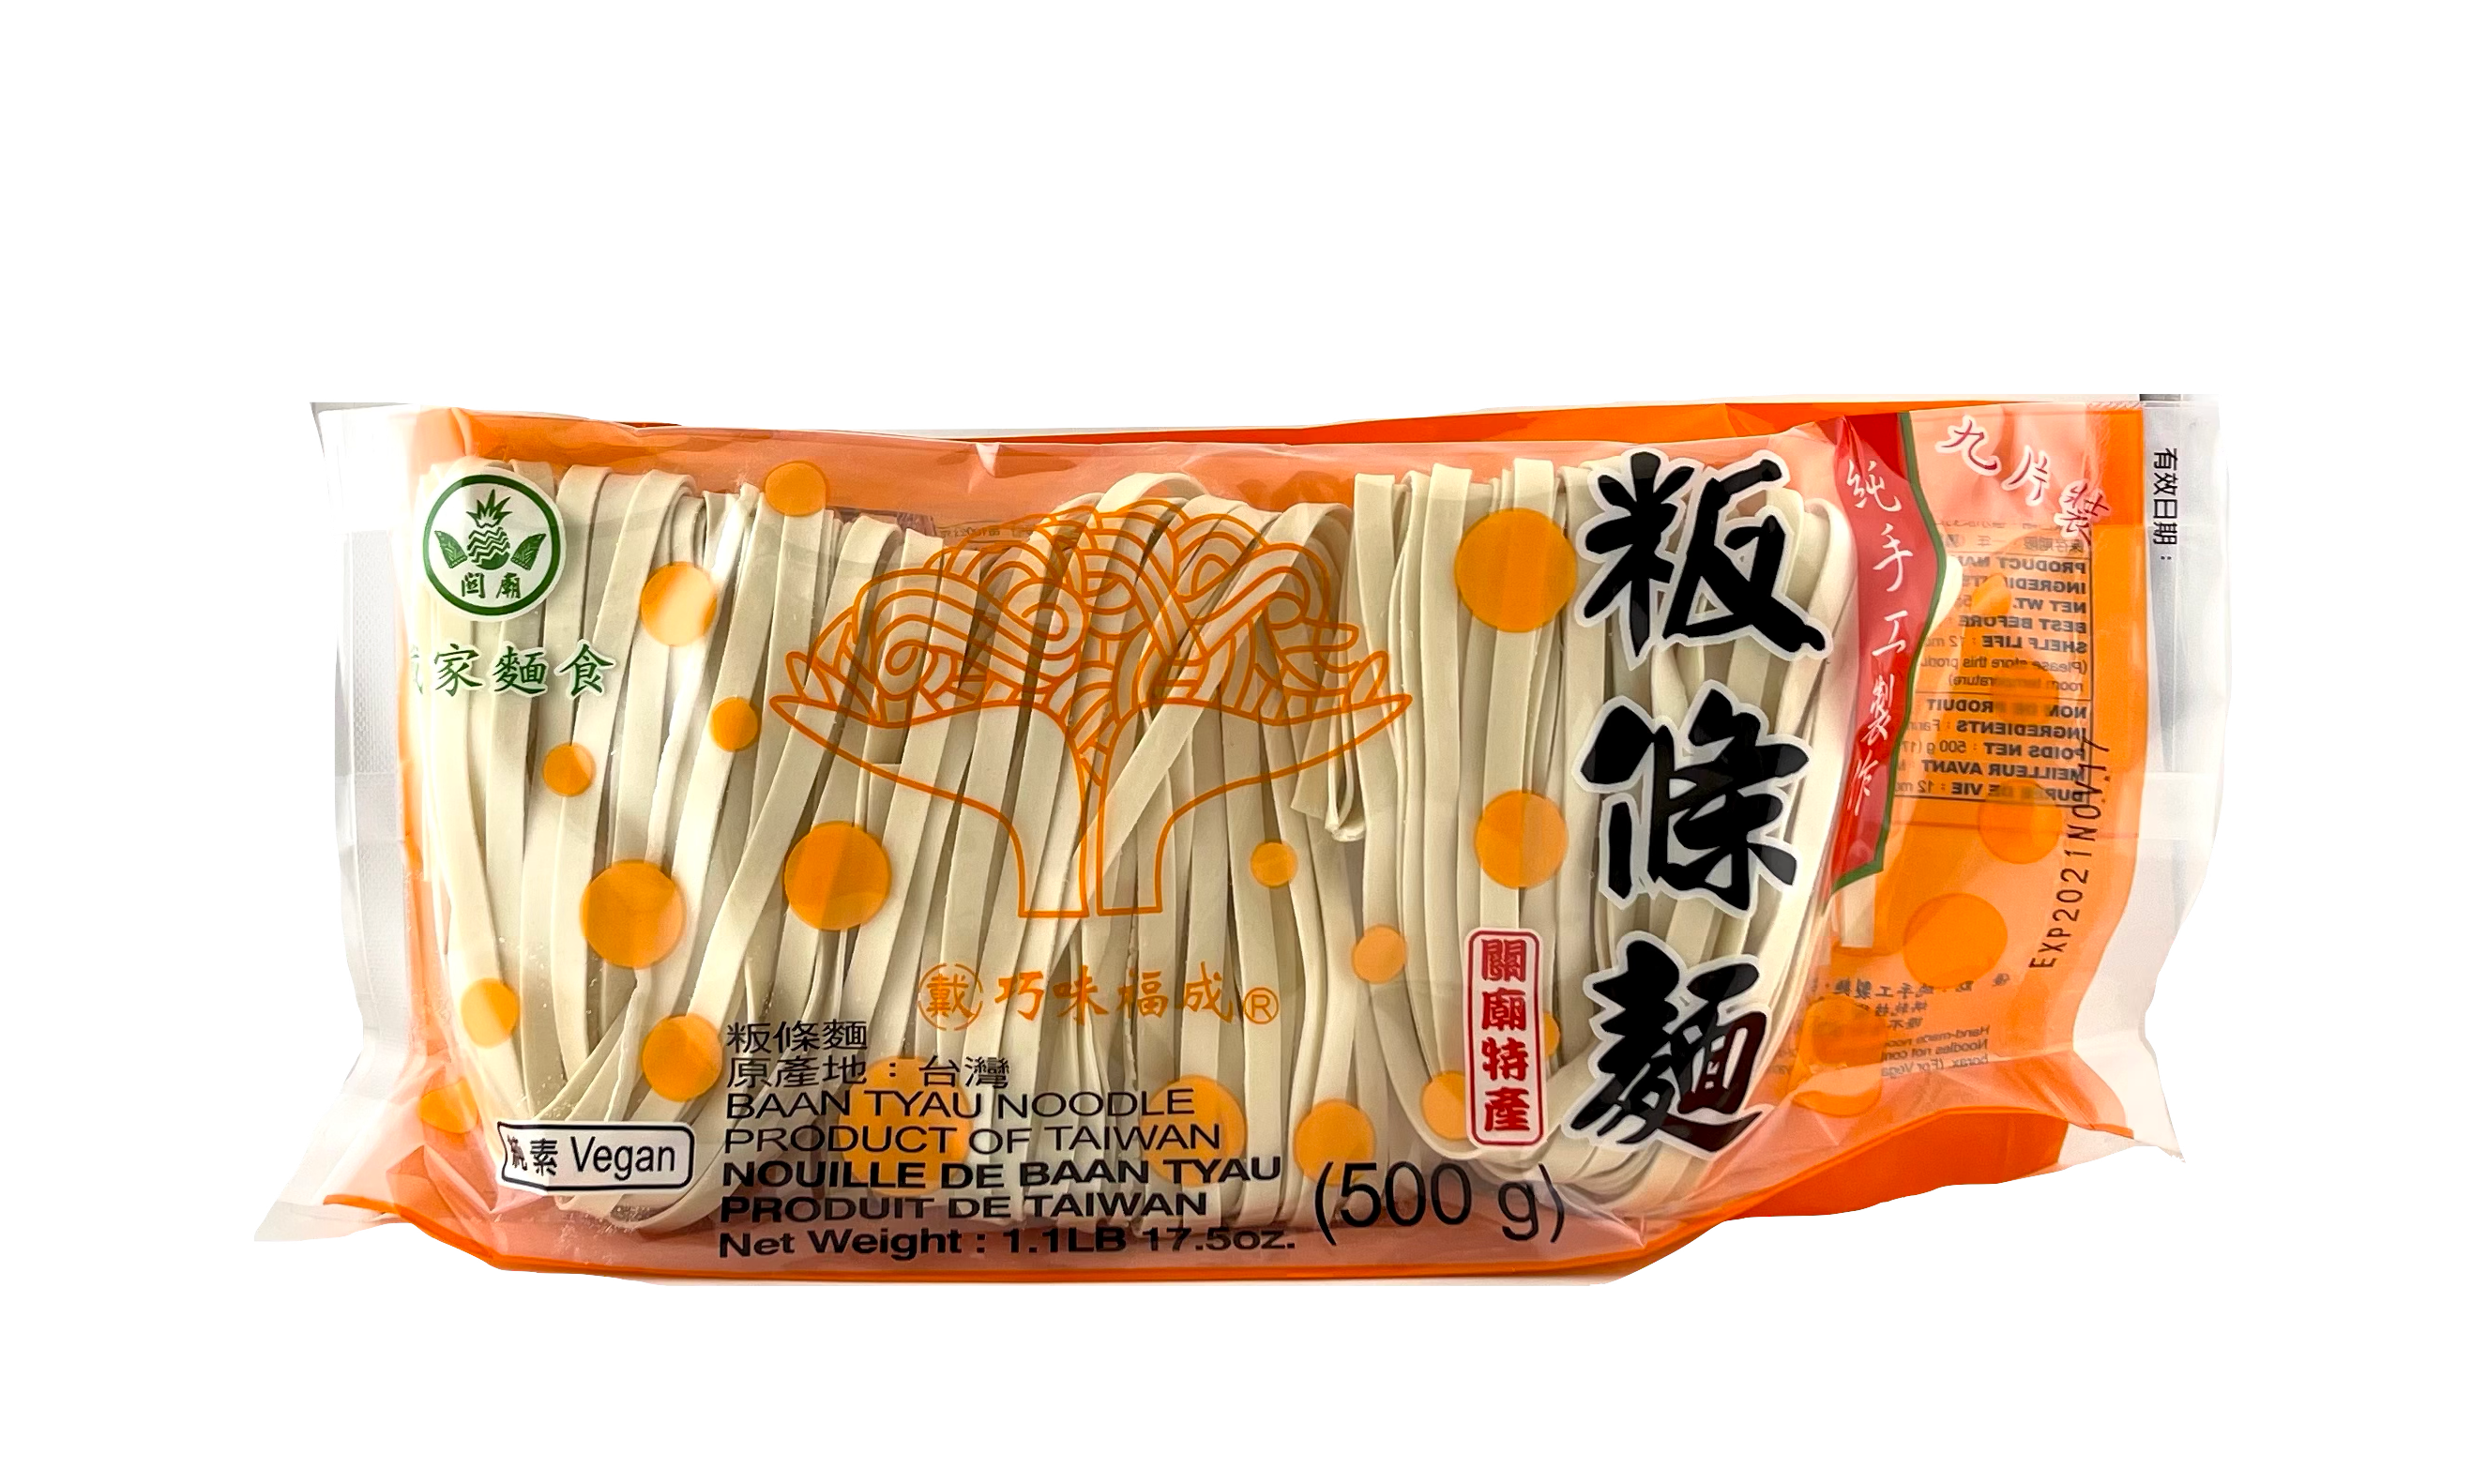 Noodles Baan Tyau 500g Fuchen Taiwan